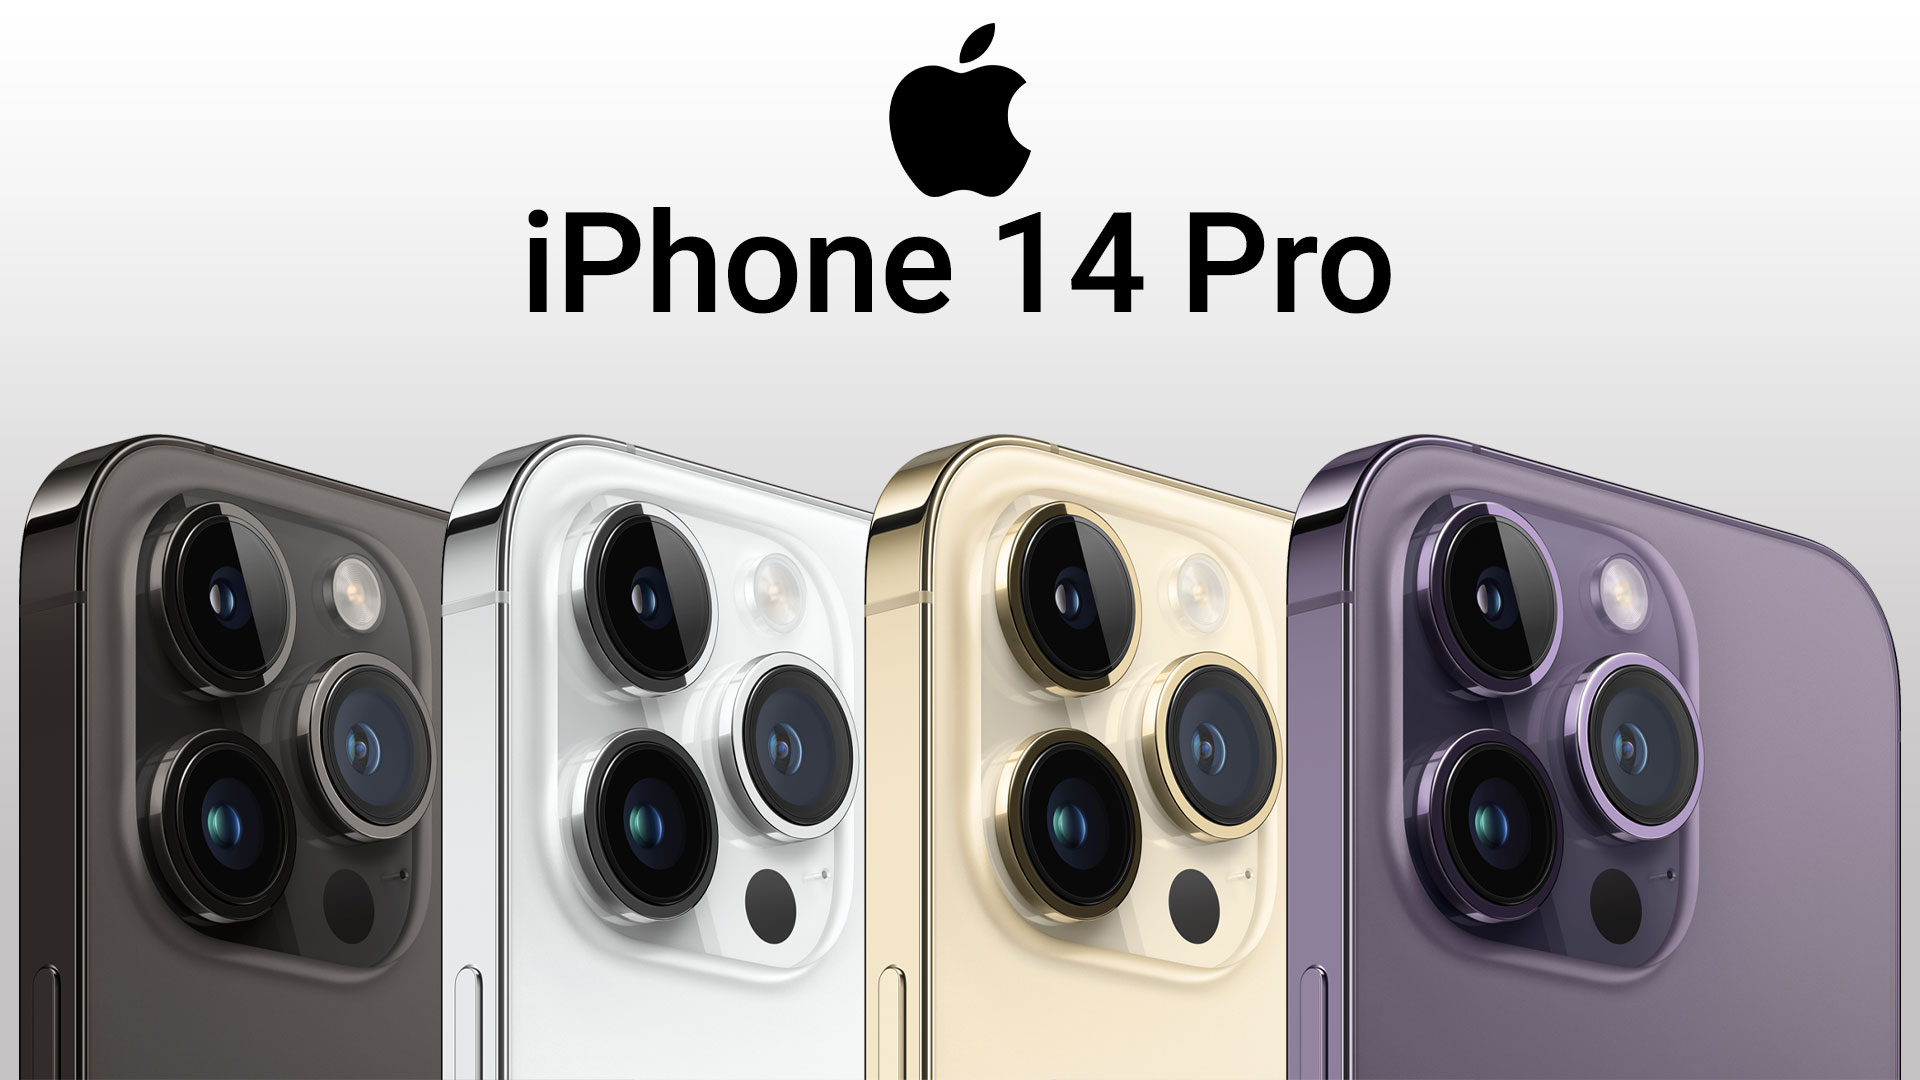 iphone-14-pro-rear-caemra-design-in-colors